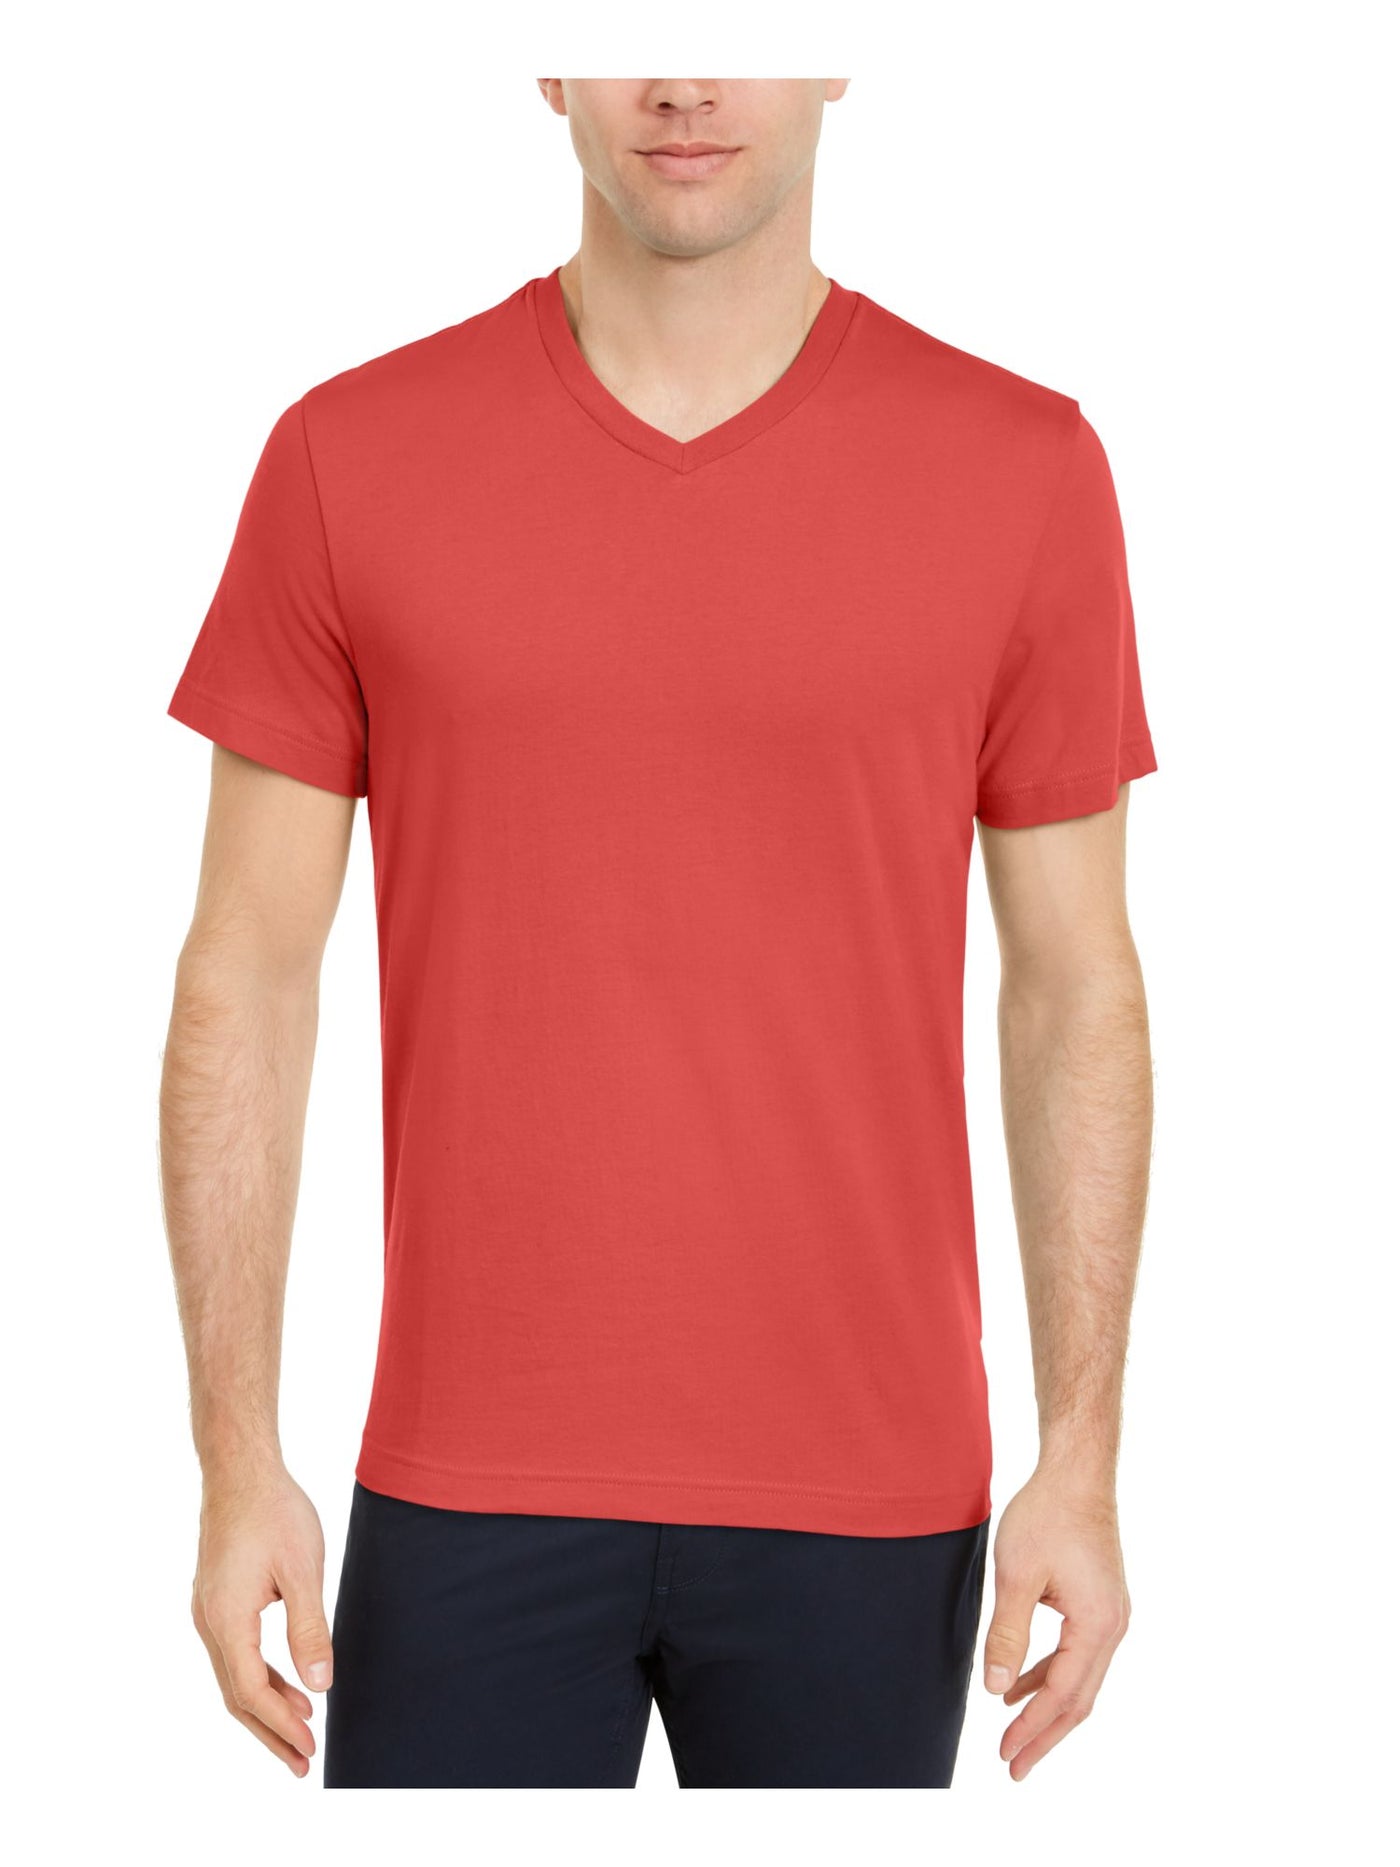 CLUBROOM Mens Red Classic Fit T-Shirt XL